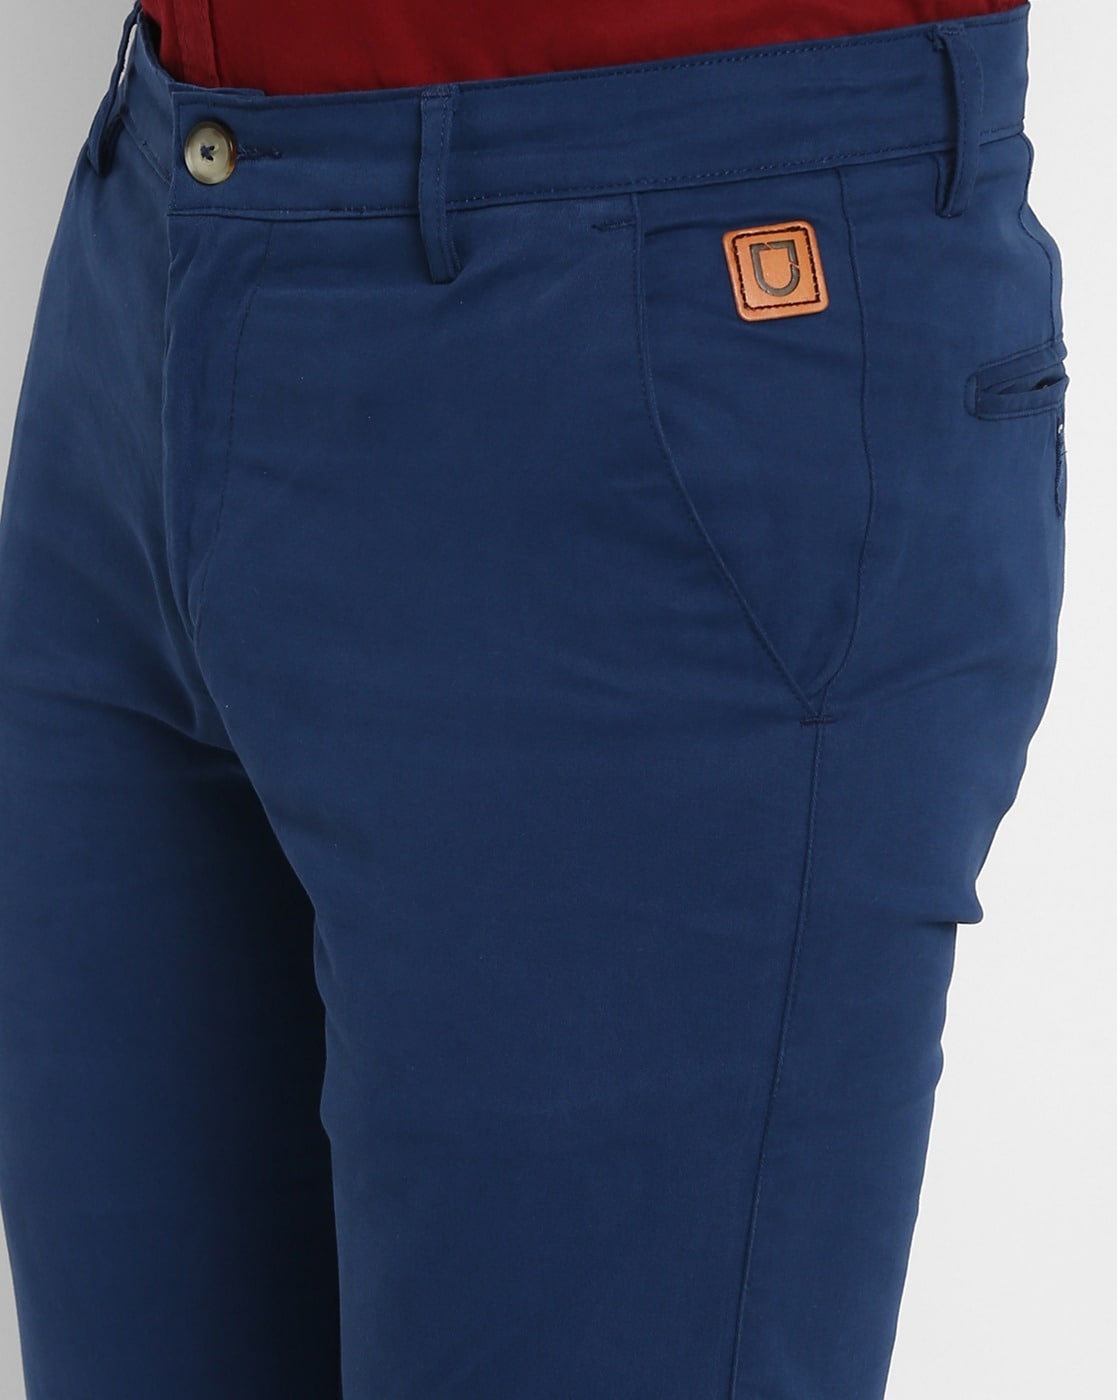 Urbano Plus Men's Royal Blue Regular Fit Solid Cargo Chino Pant